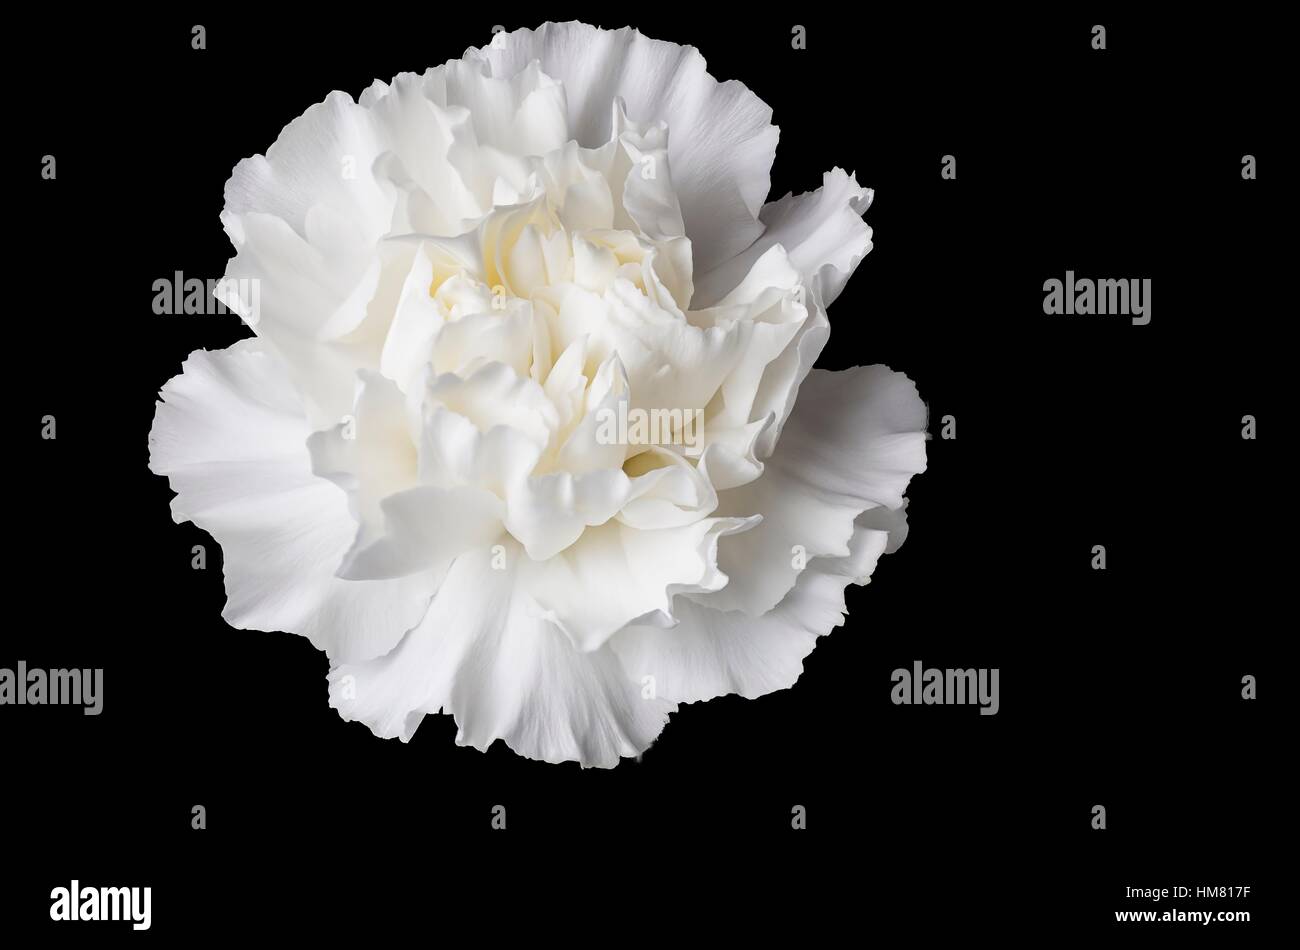 Single White Carnation Flowerhead set on a black background Stock Photo ...